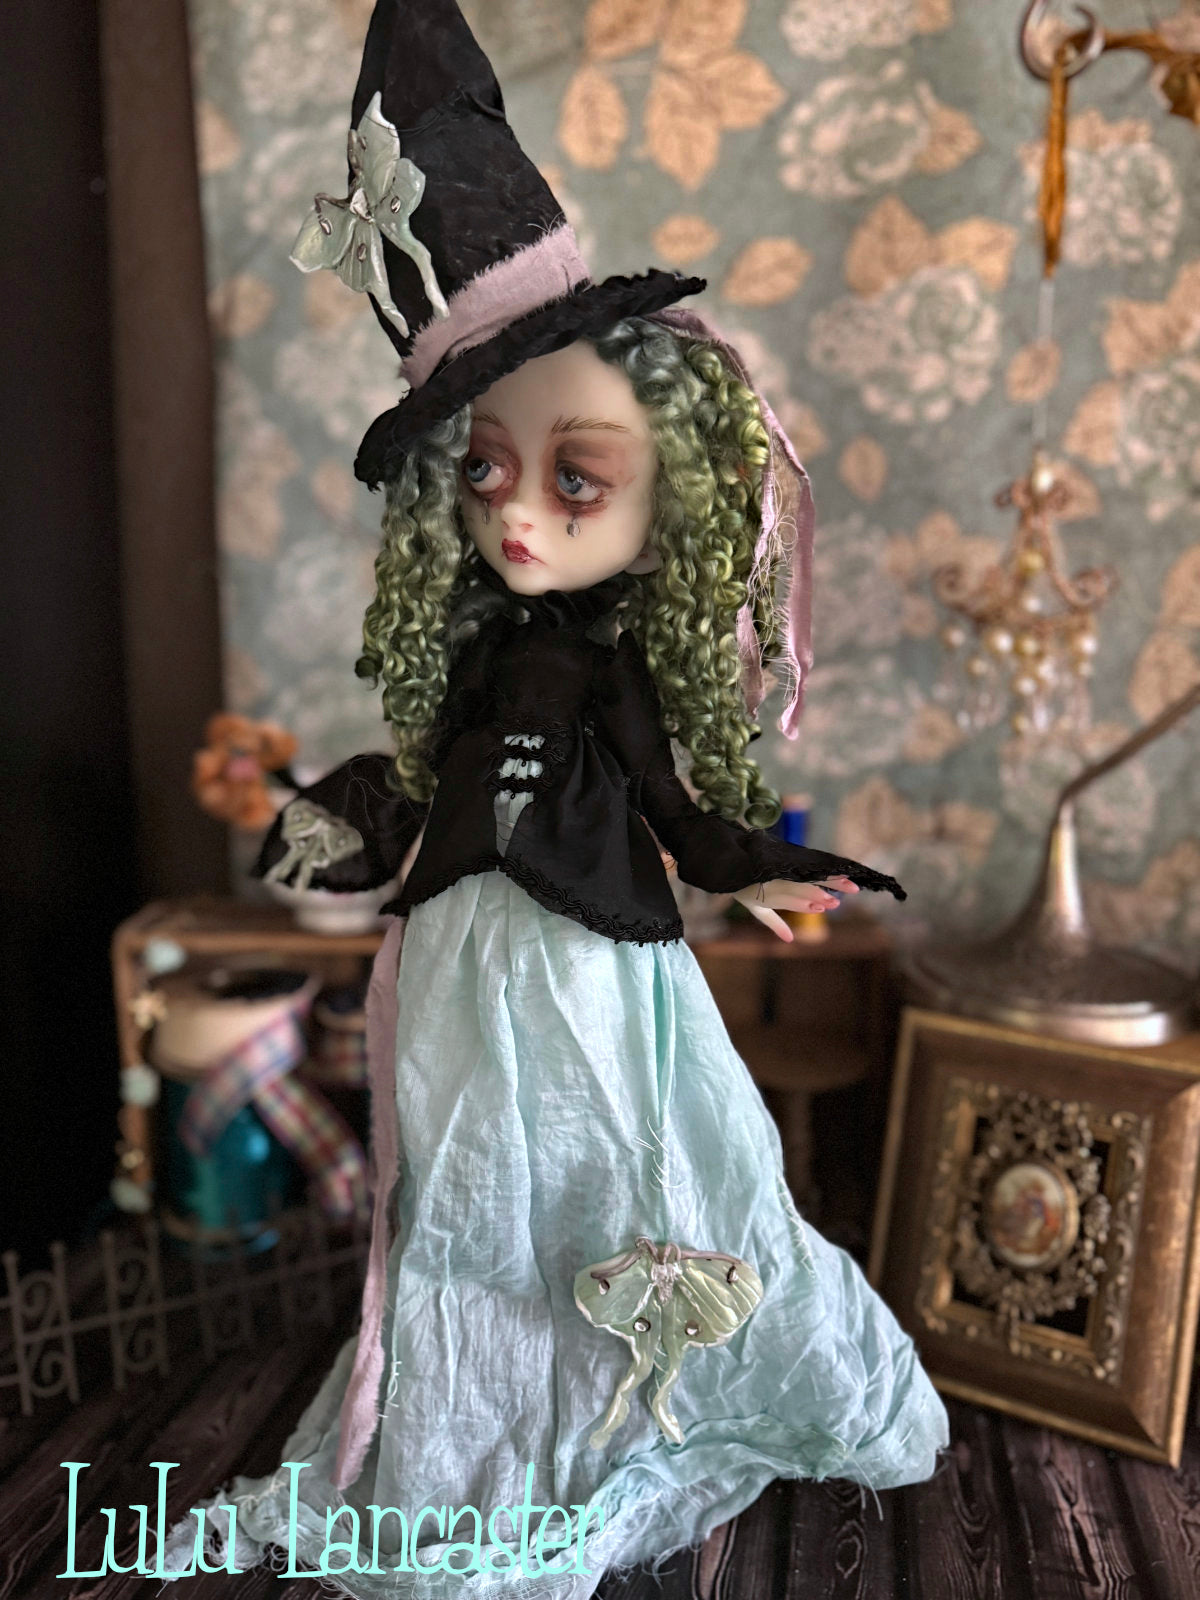 The Luna Moth Witch Original LuLu Lancaster Art Doll